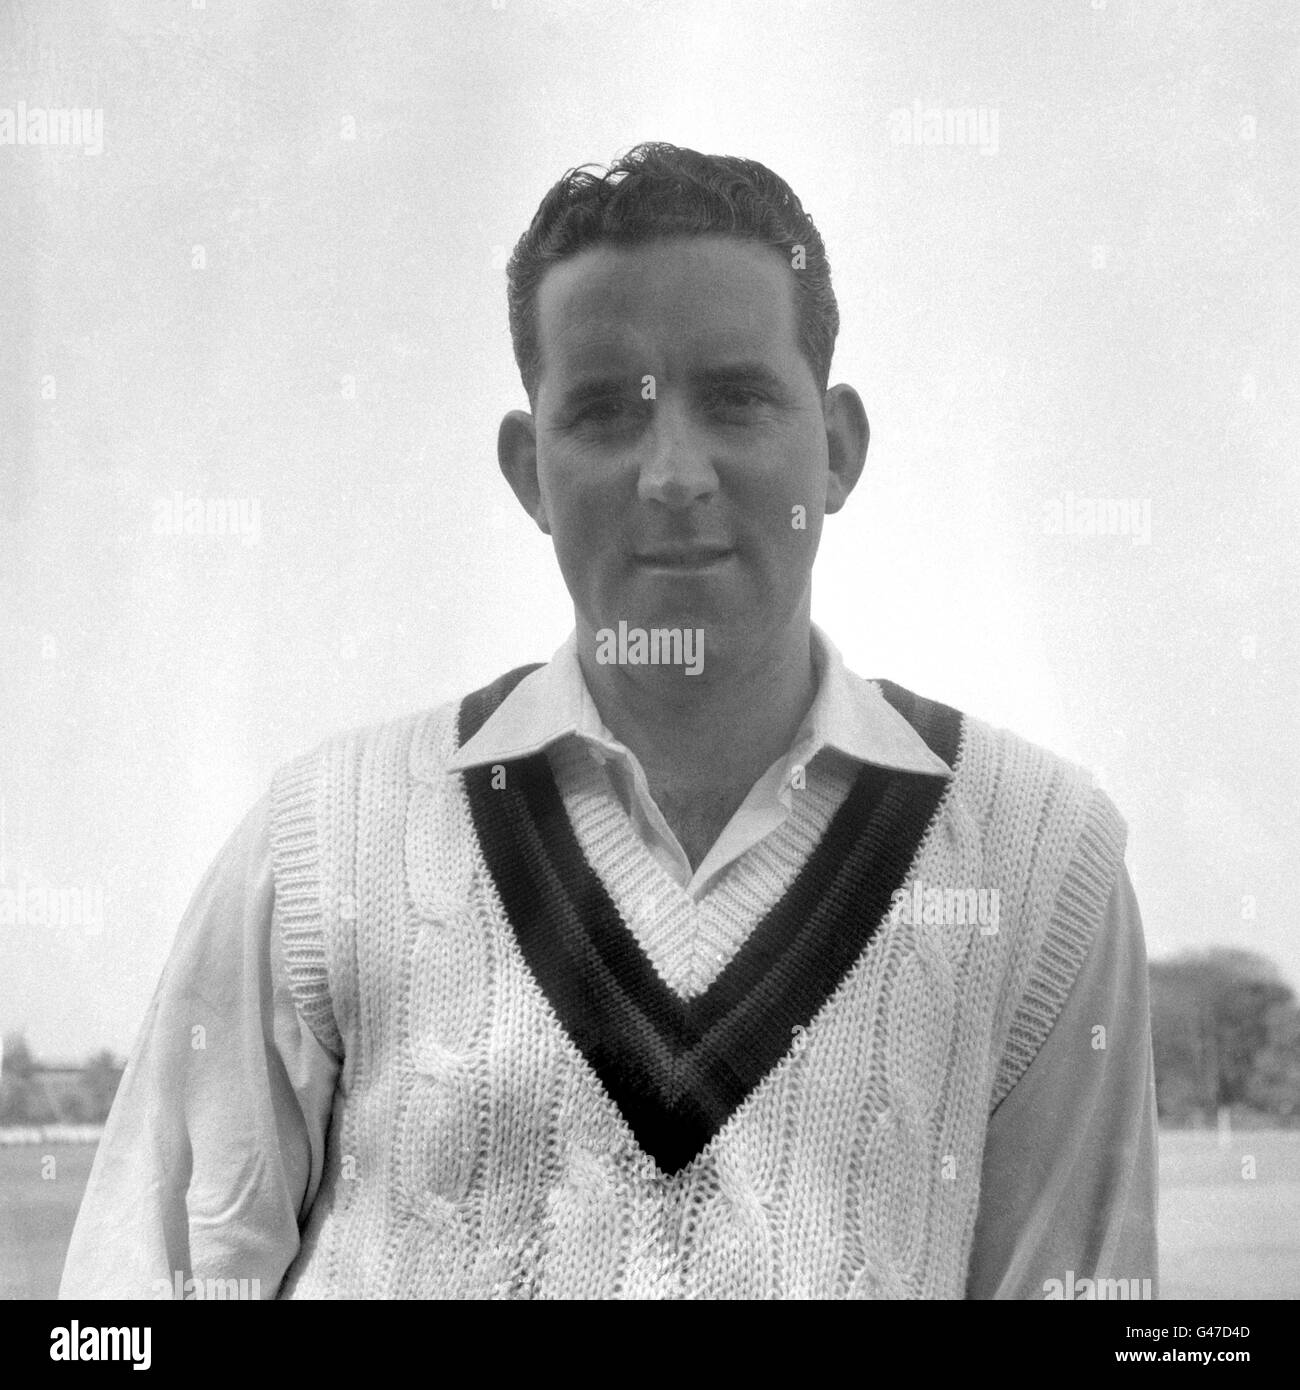 Cricket - Lancashire County Cricket Club Photocall Foto Stock